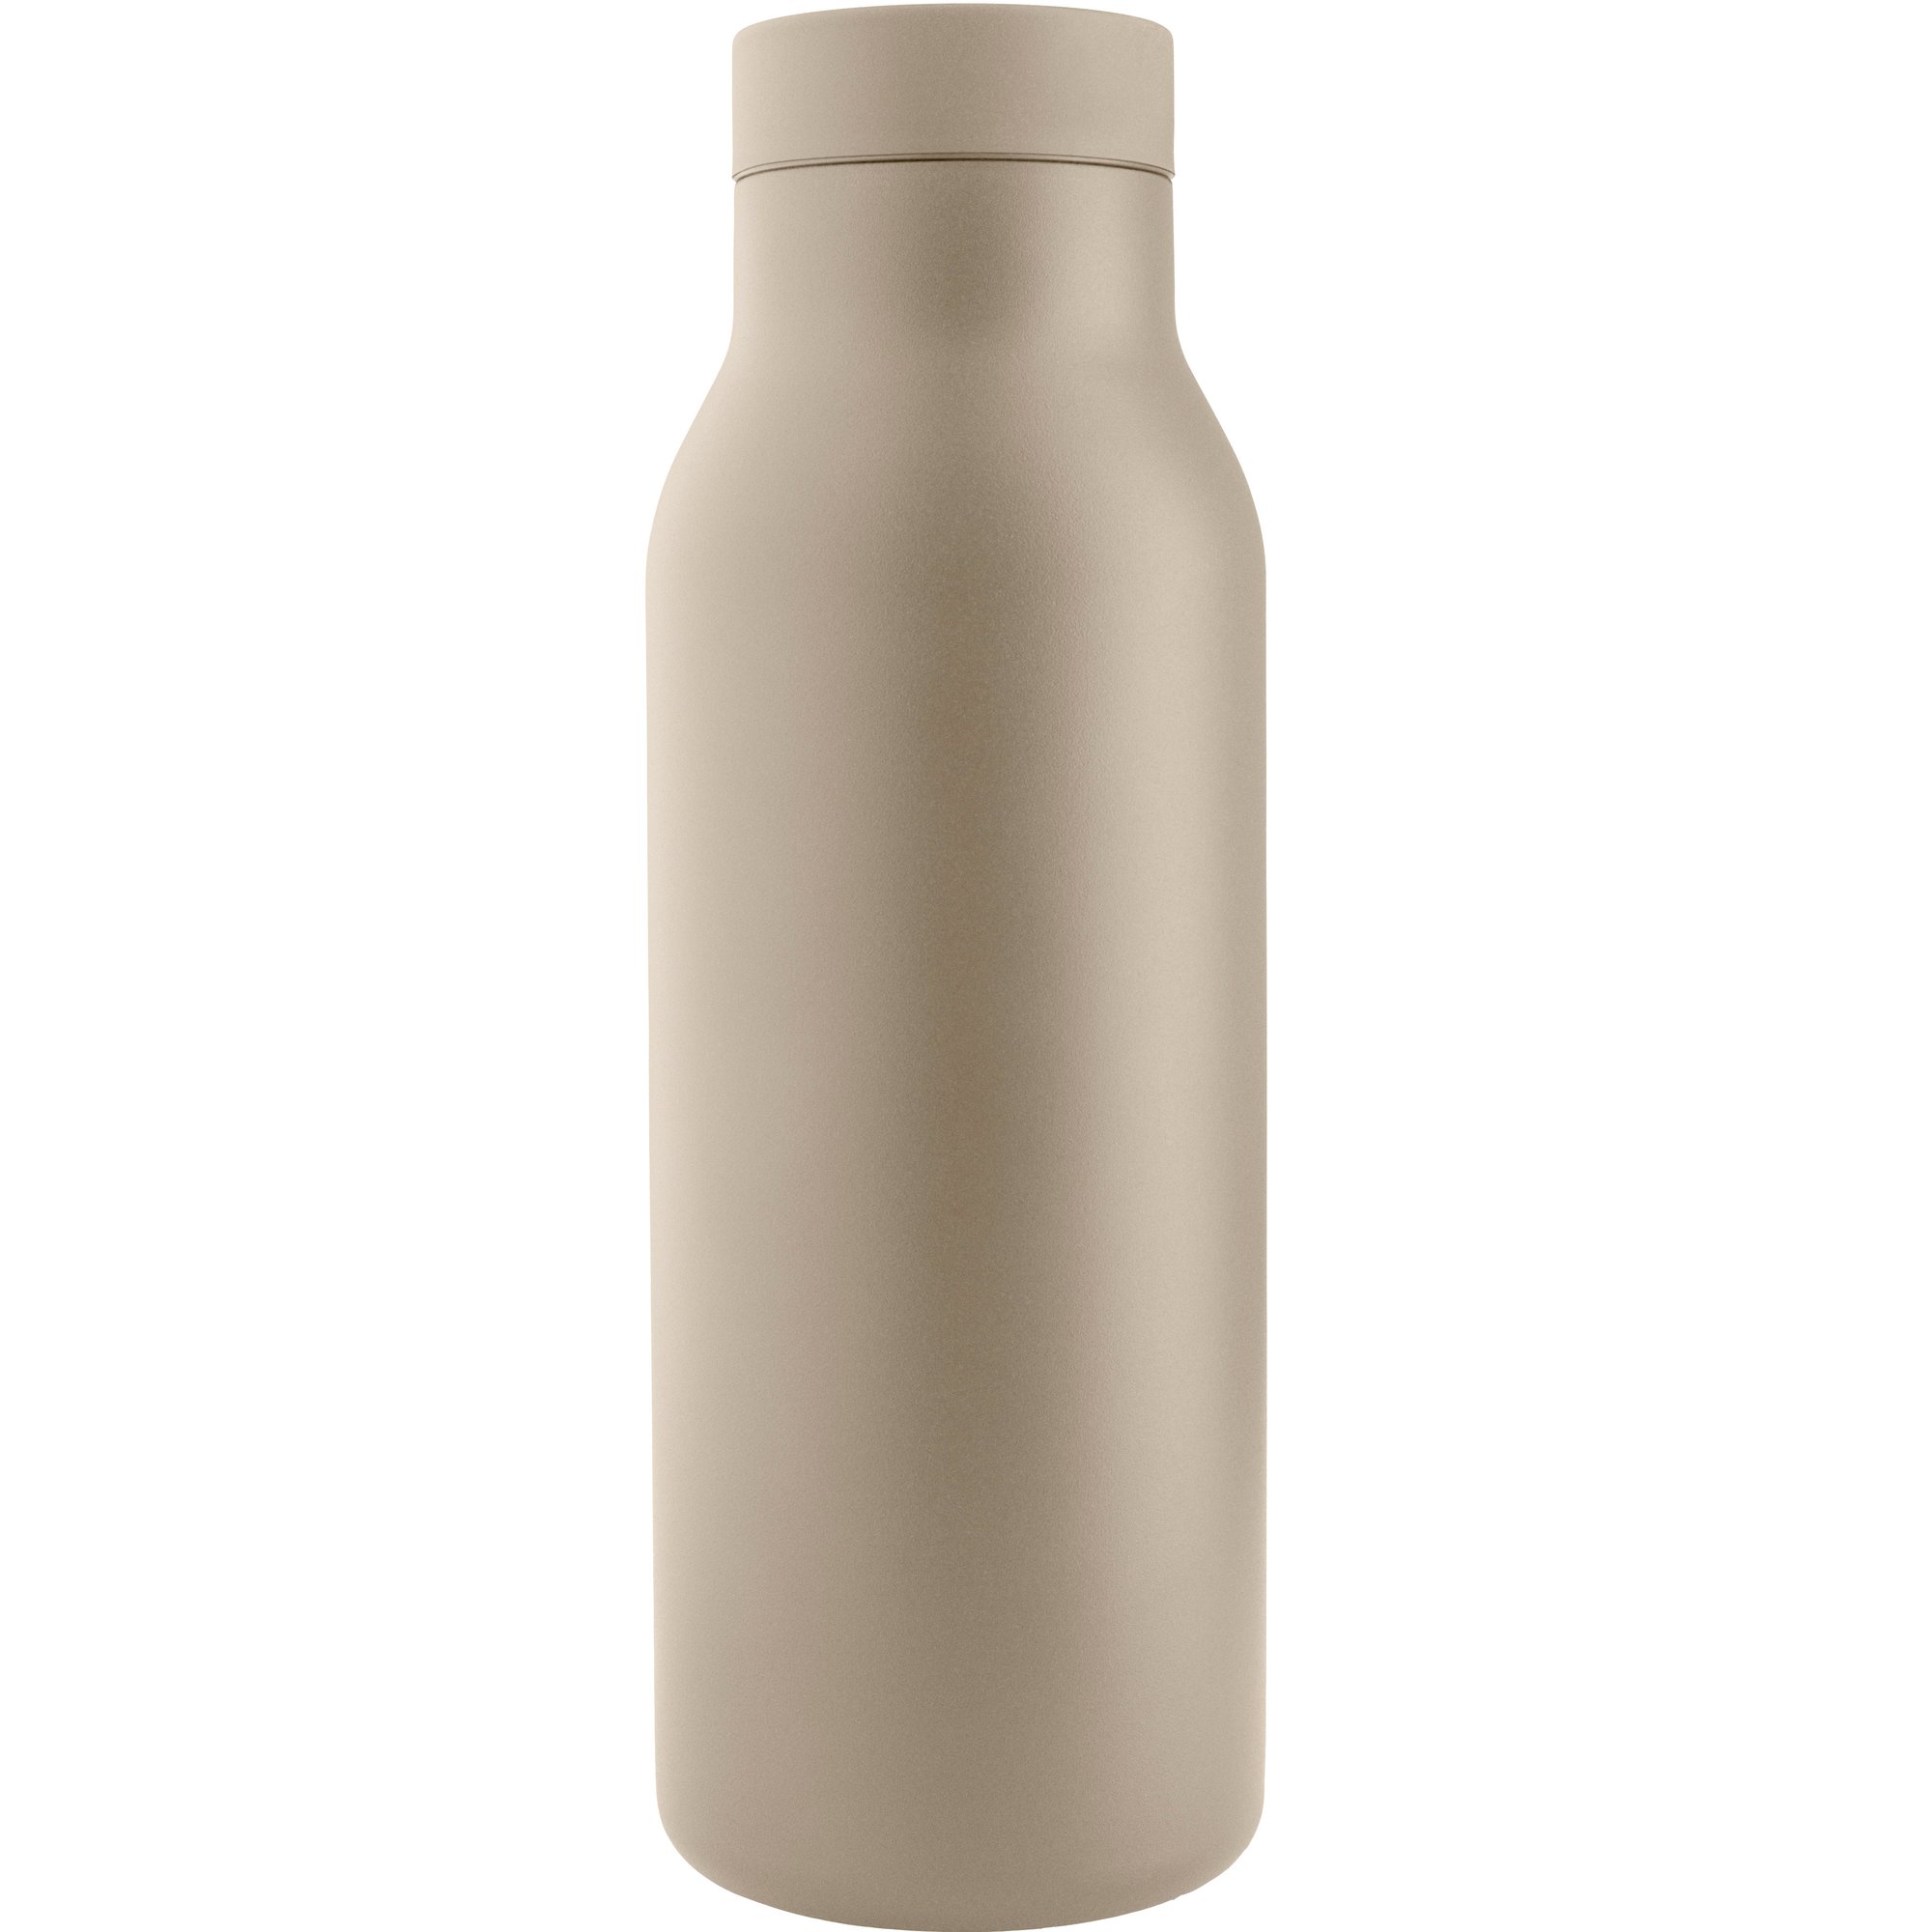 Eva Solo Urban termoflaske 0,5 liter pearl beige